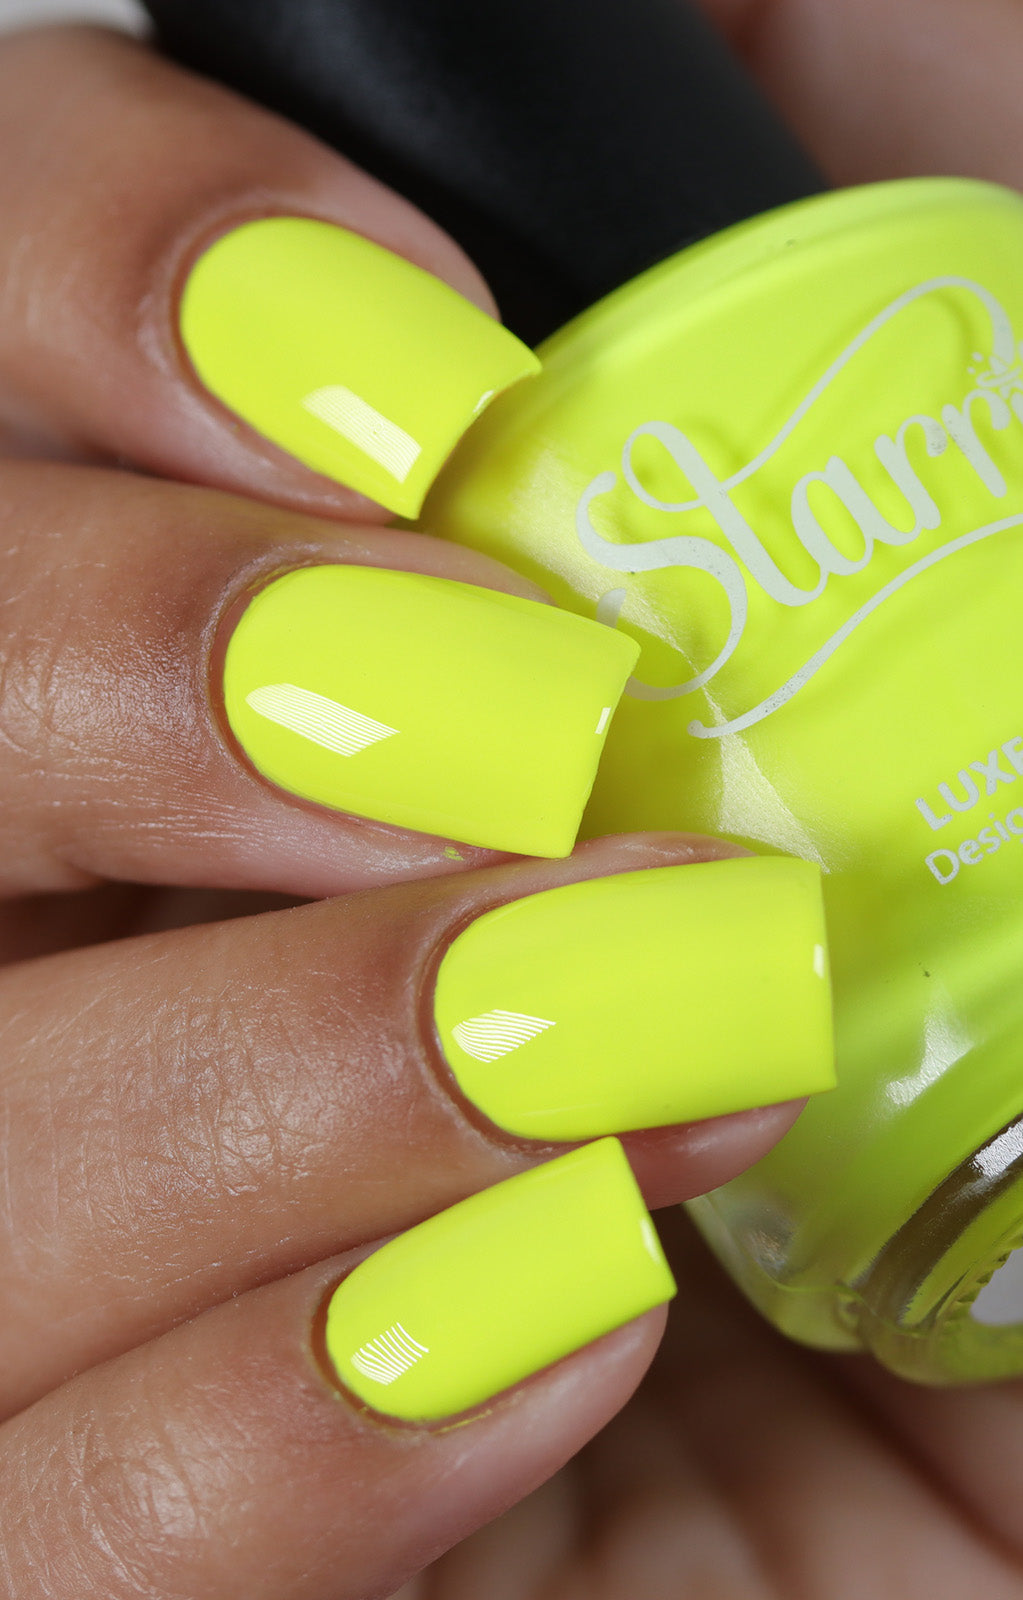 Bluesky Gel Nail Polish Yellow Lemon Colors UV LED Nail Manicure Soak Off |  eBay